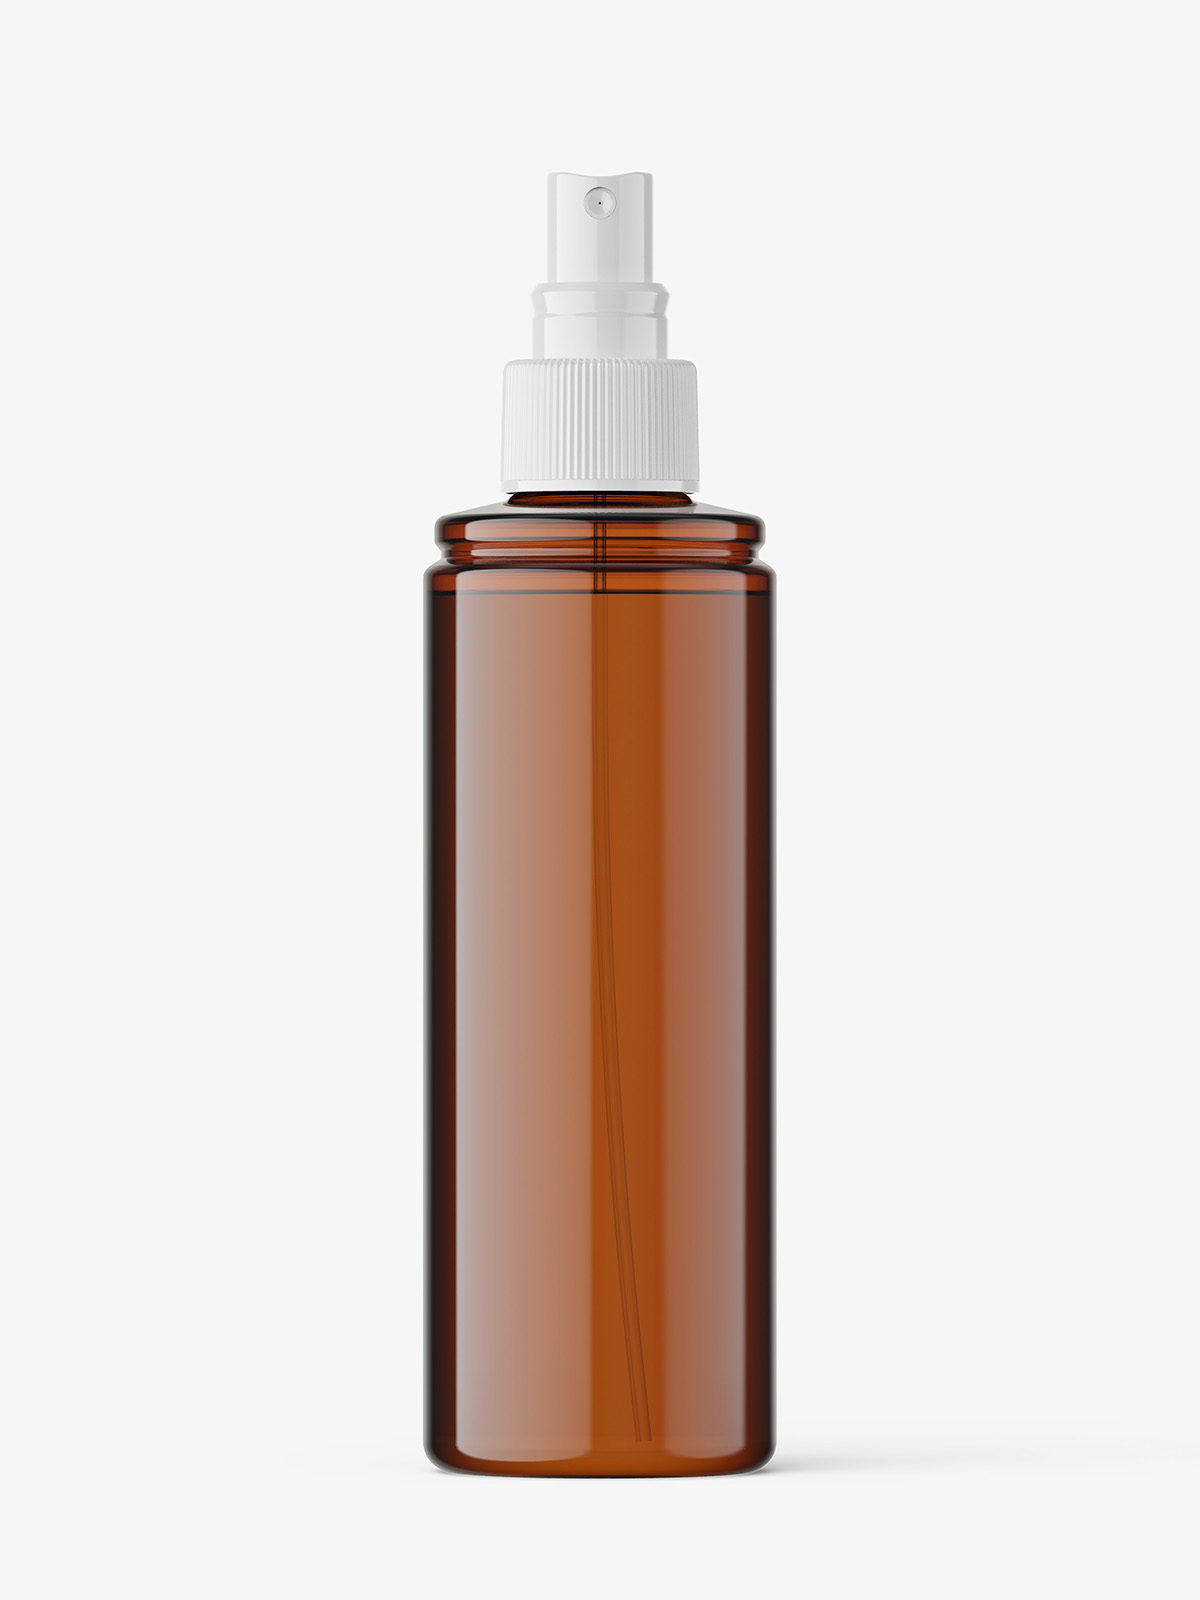 Download Amber bottle with spray cap mockup - Smarty Mockups